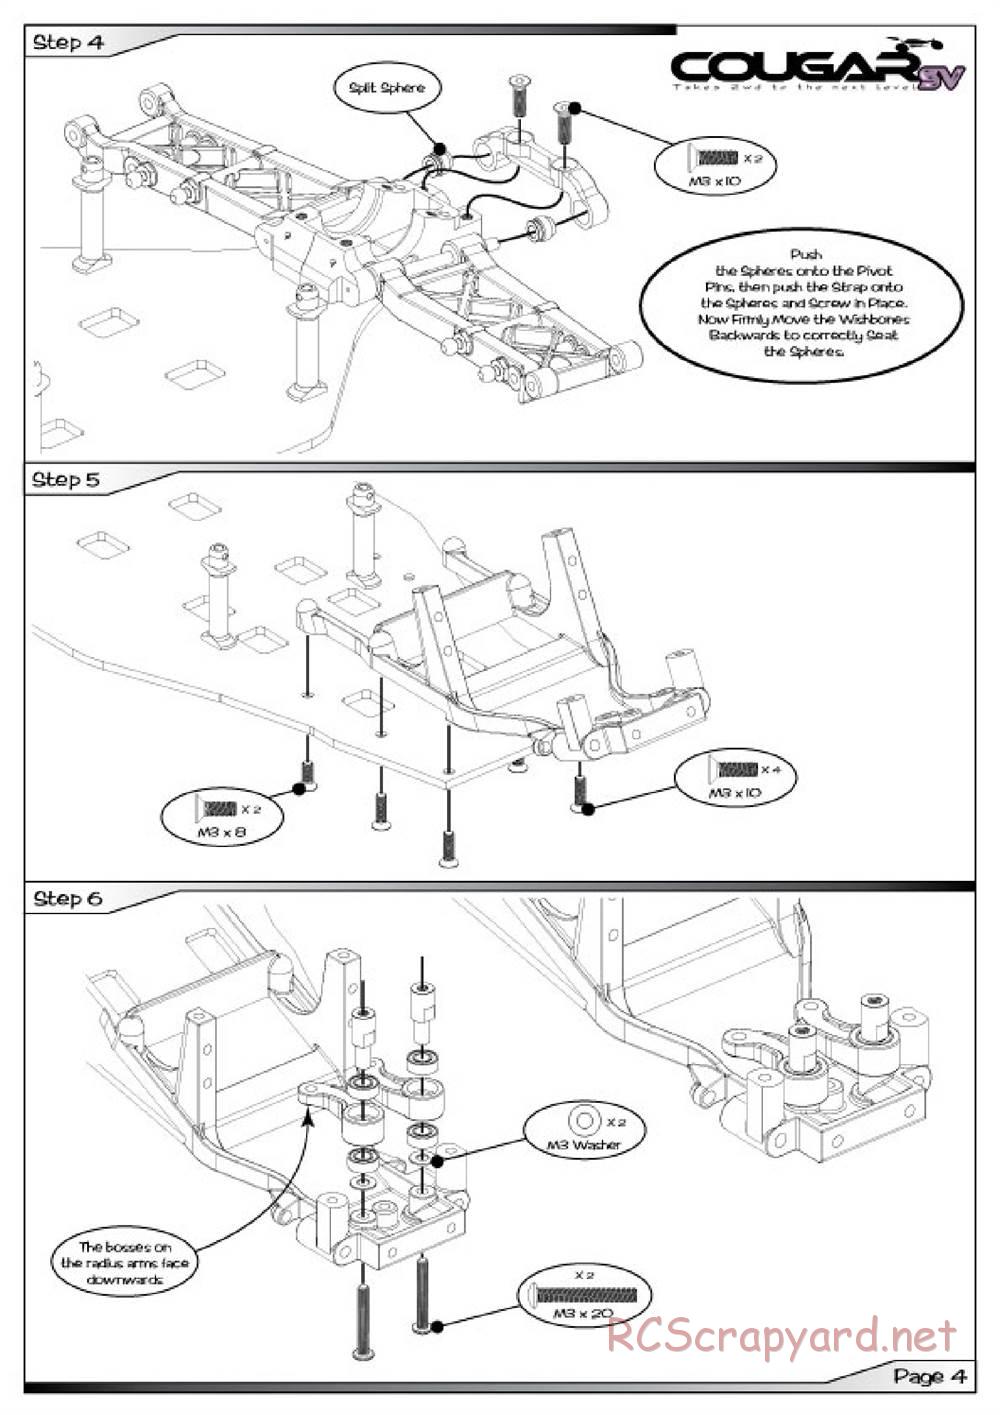 Schumacher - Cougar SV - Manual - Page 5